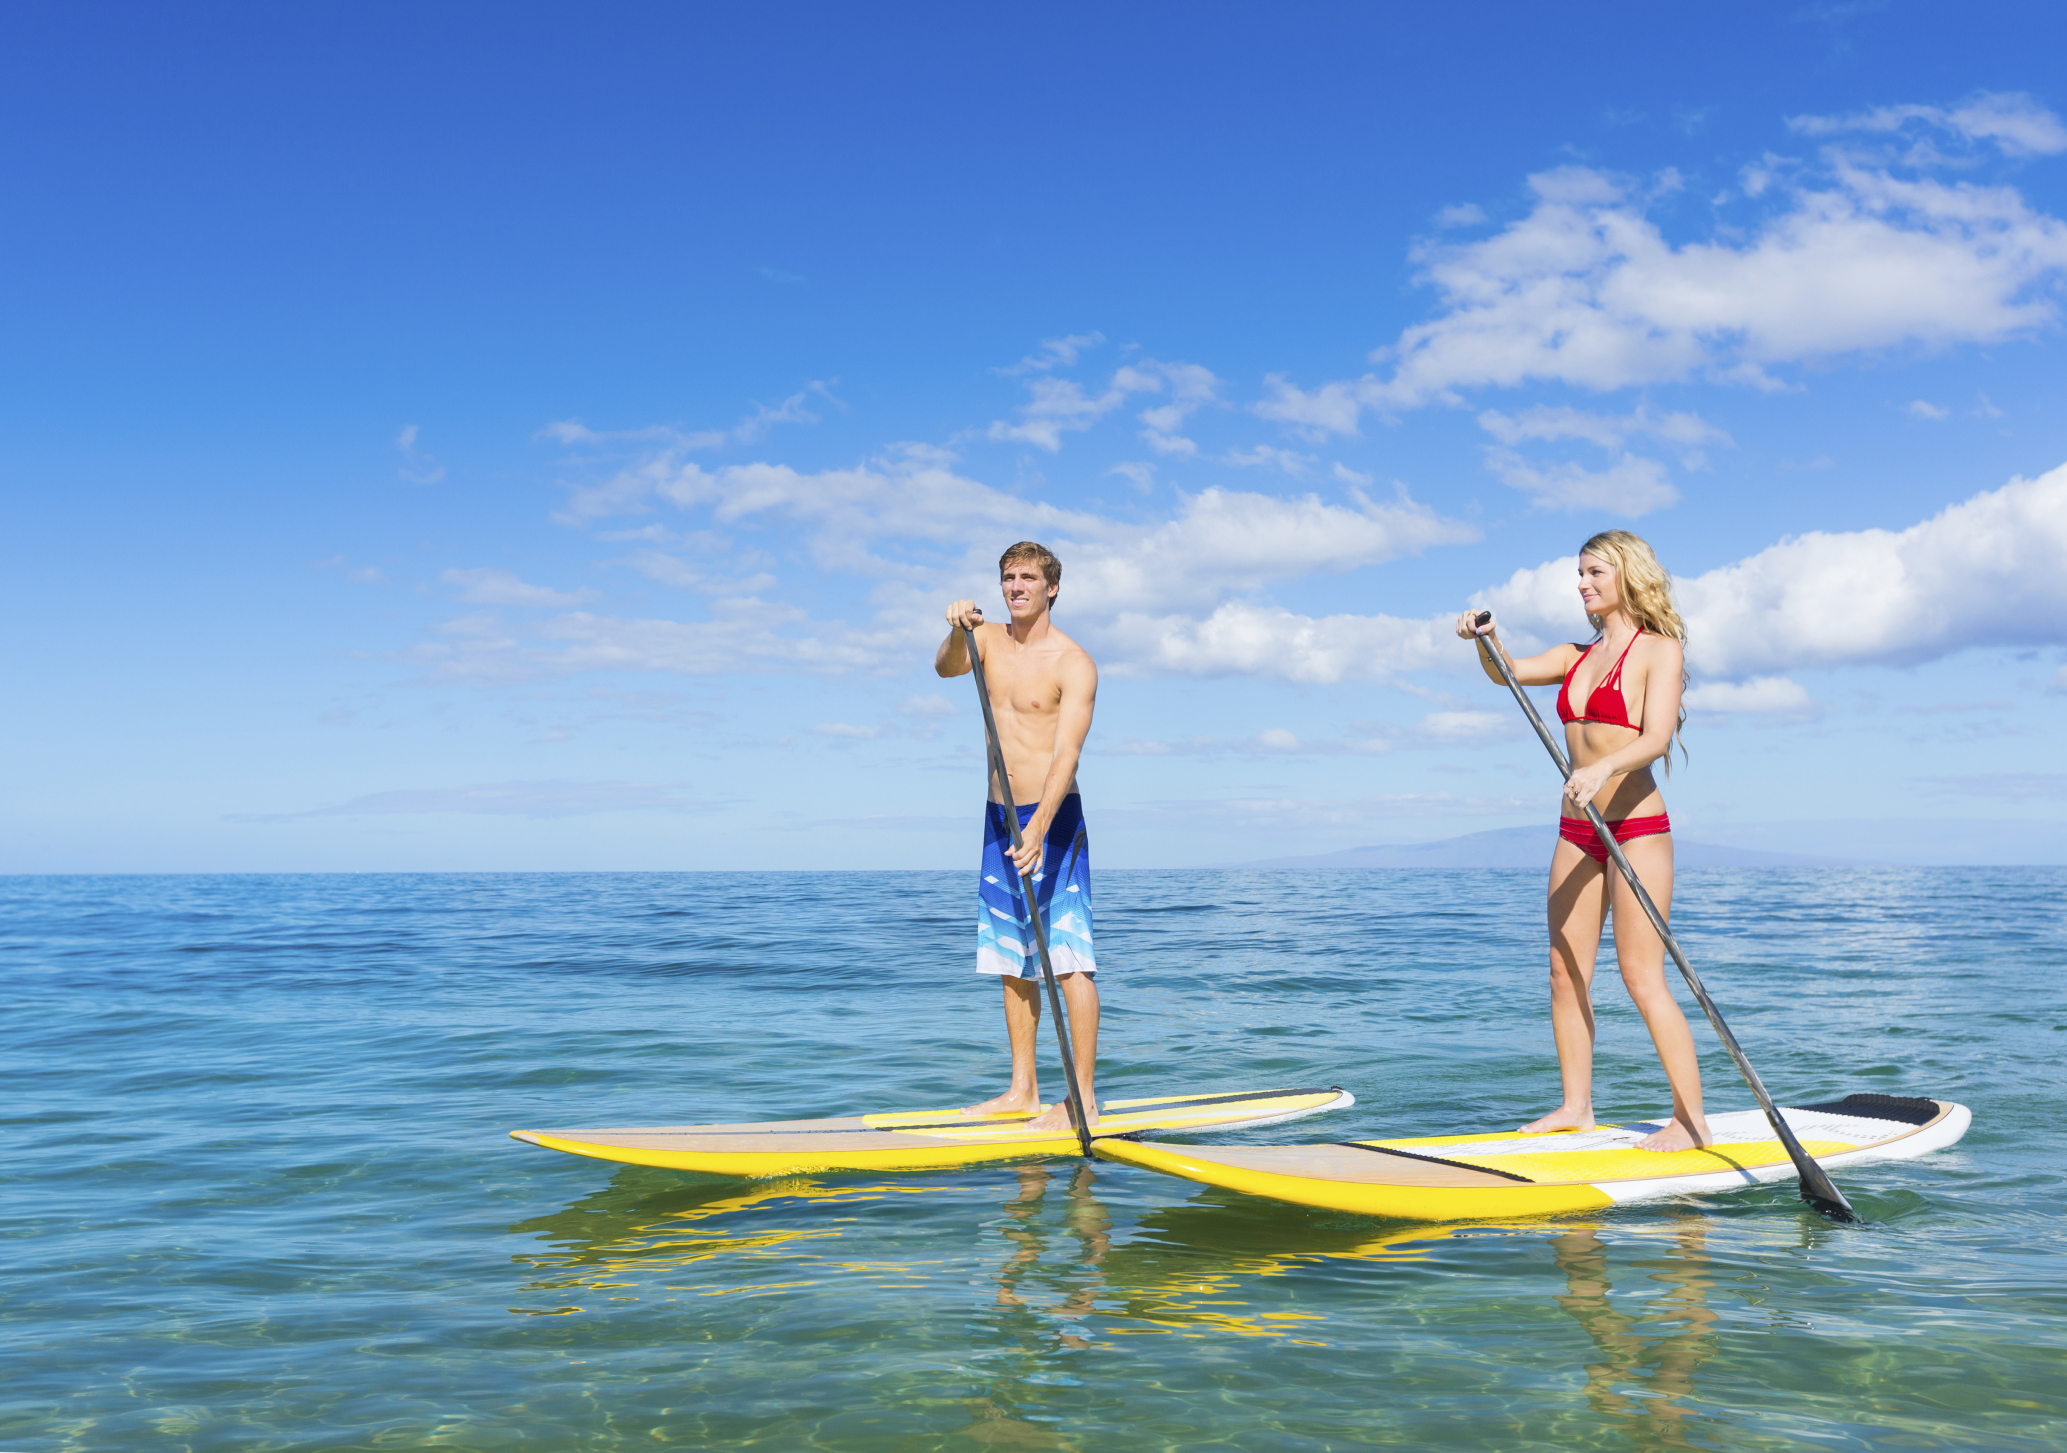 10 Fun Water Sports to Enjoy Near Pawleys Island